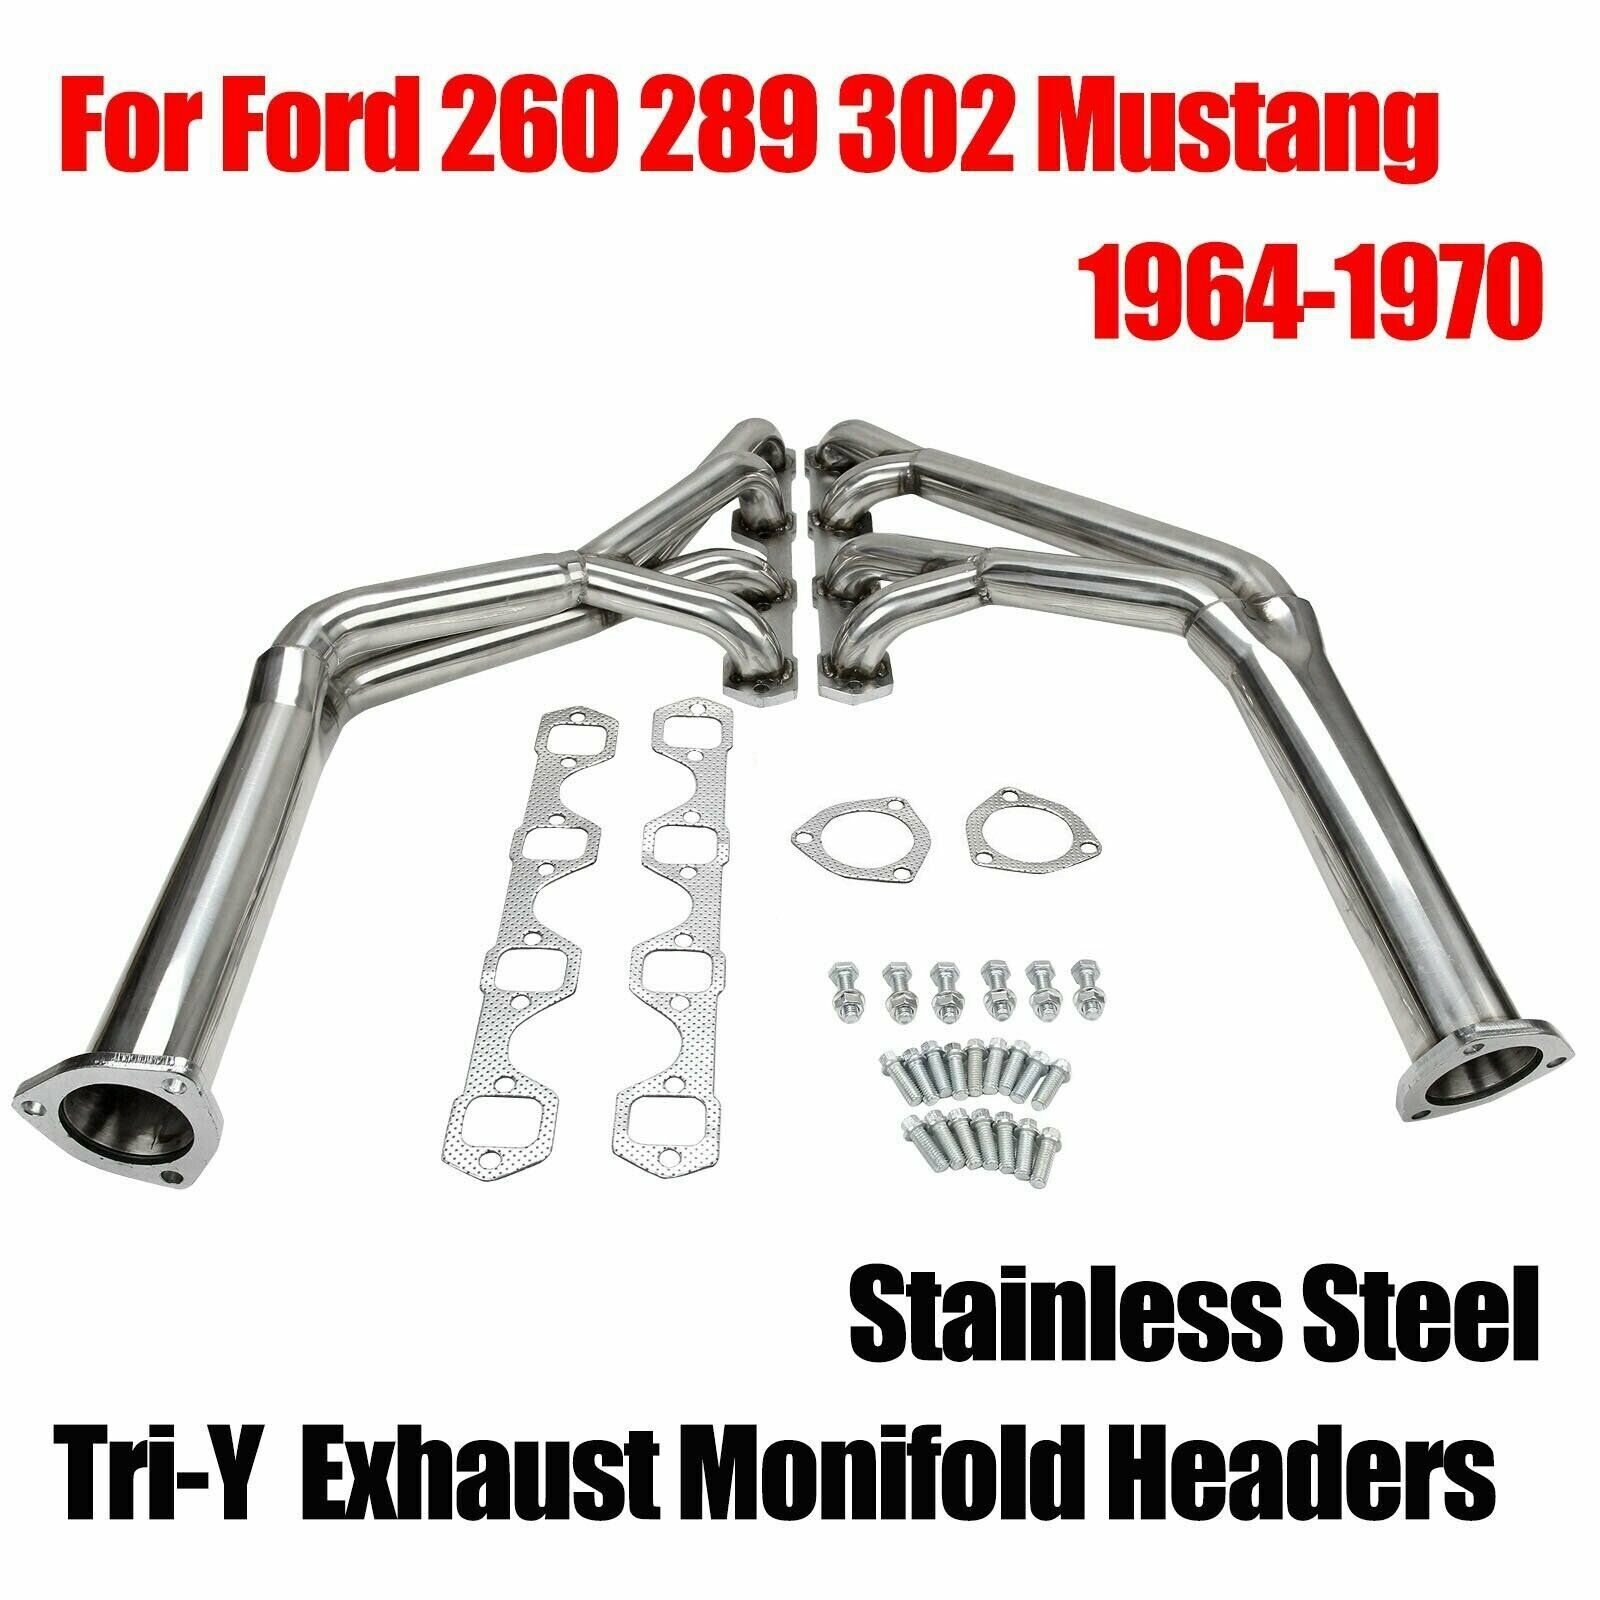 Fit Ford 260 289 302  Mustang 1964-1970 Tri-Y Stainless Steel Exhaust Headers